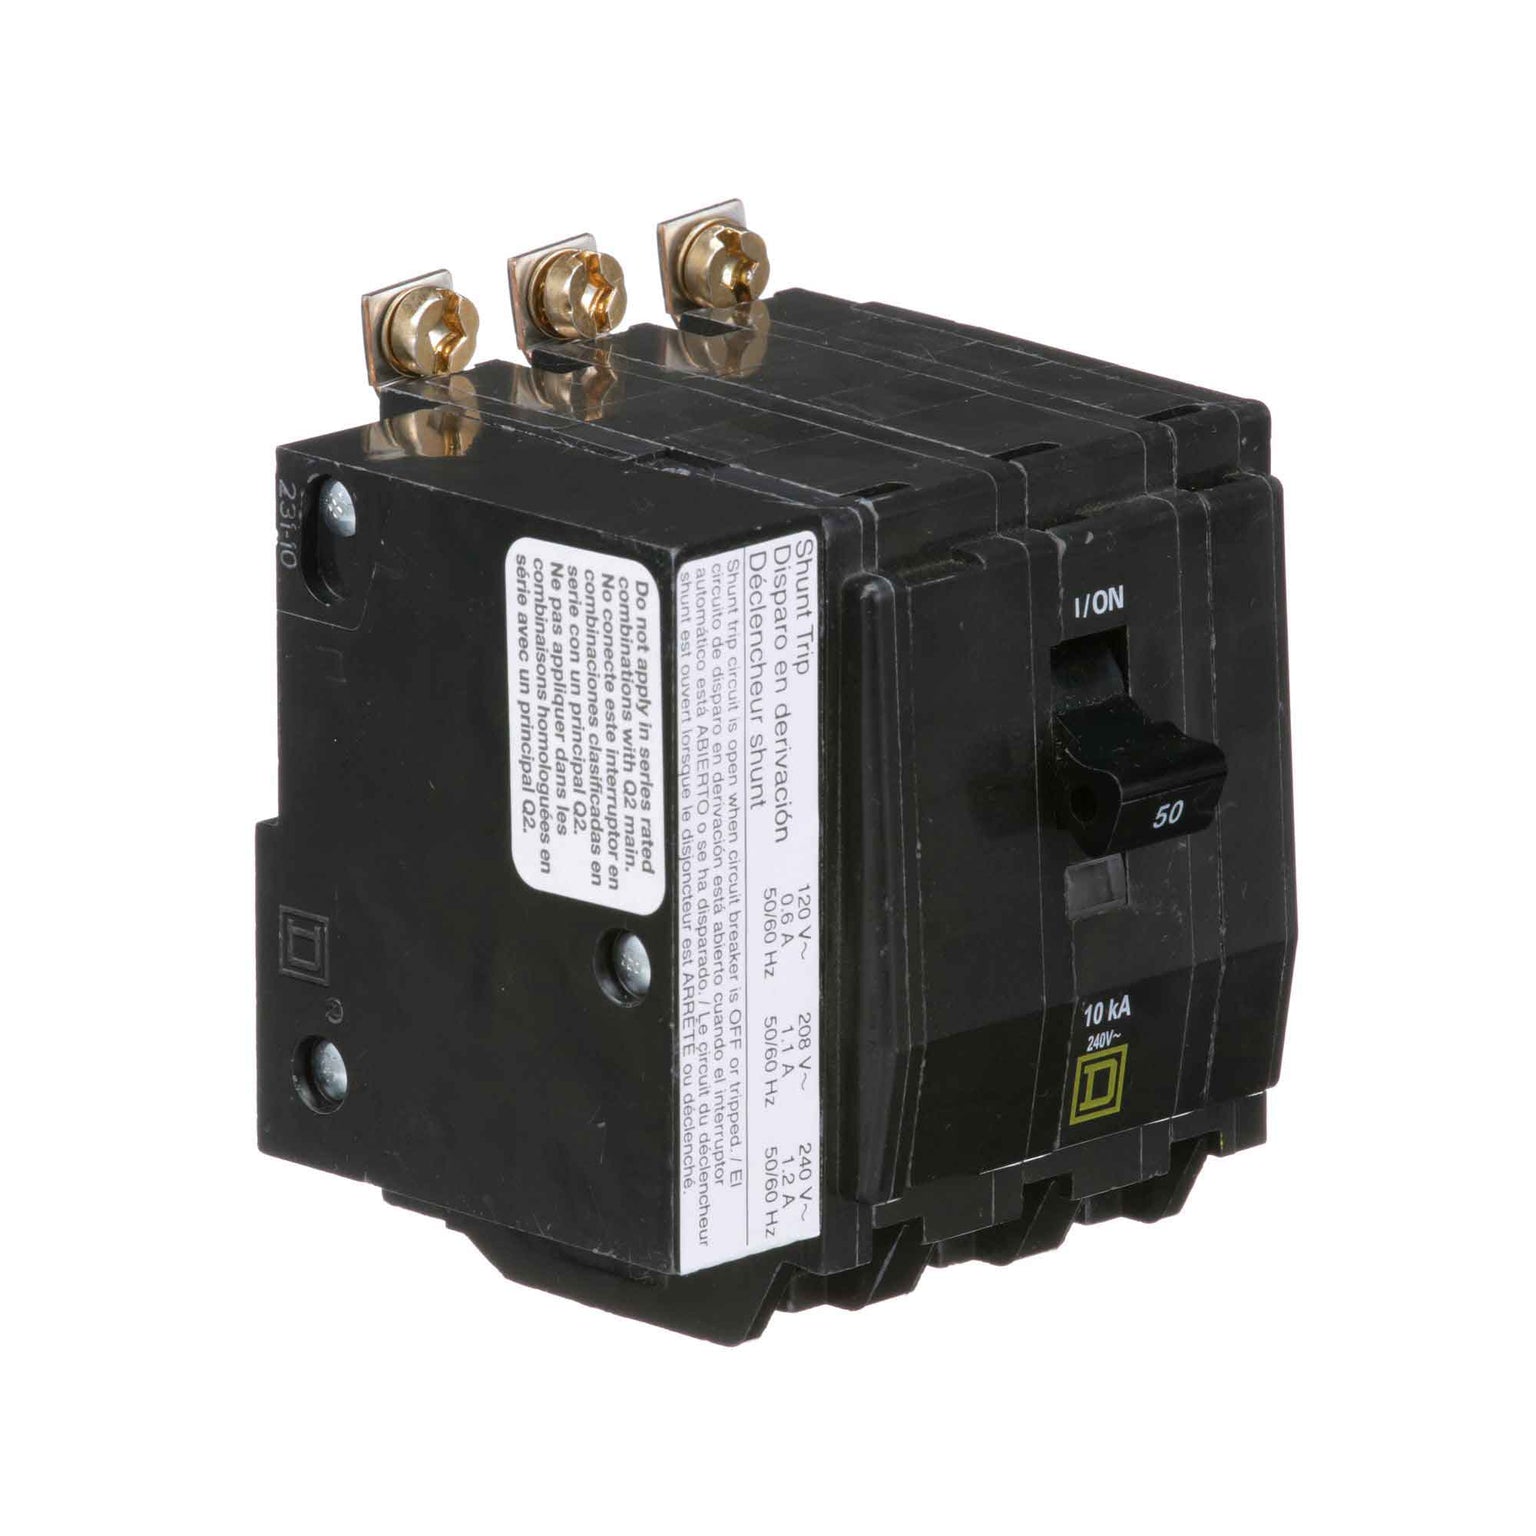 QOB3501021 - Square D - Molded Case Circuit Breaker